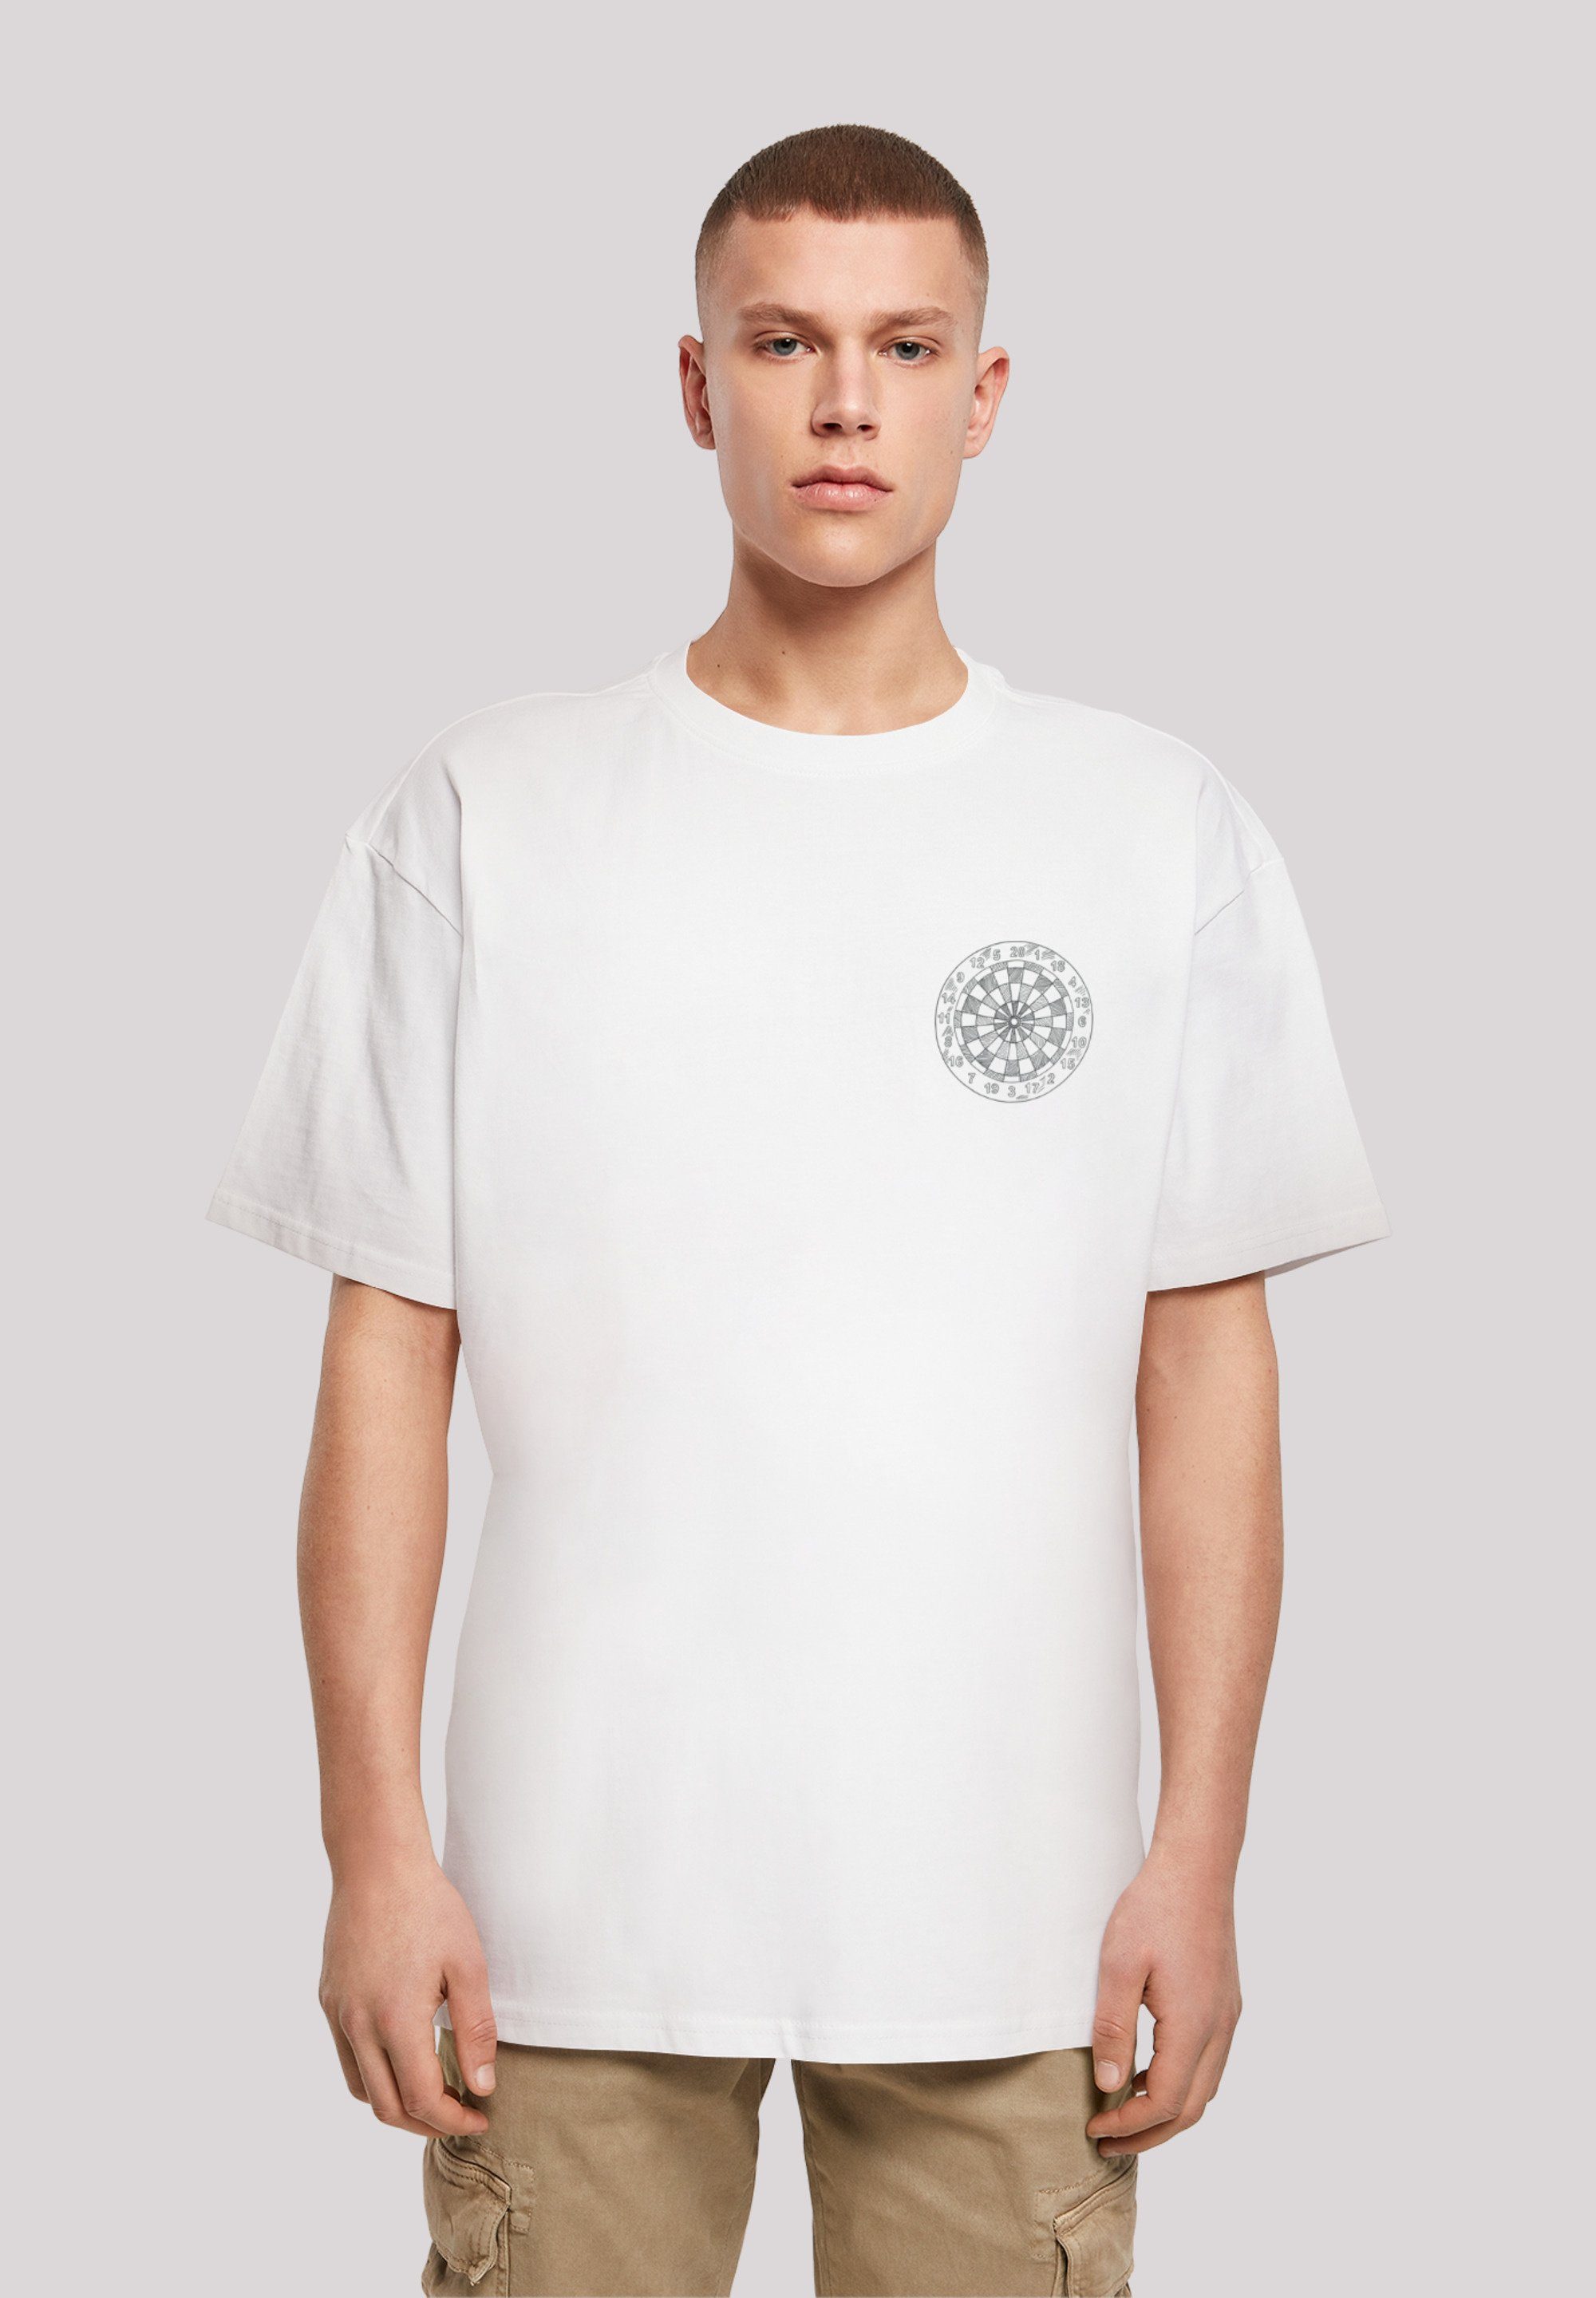 T-Shirt Print F4NT4STIC Darts Dartscheibe Board weiß